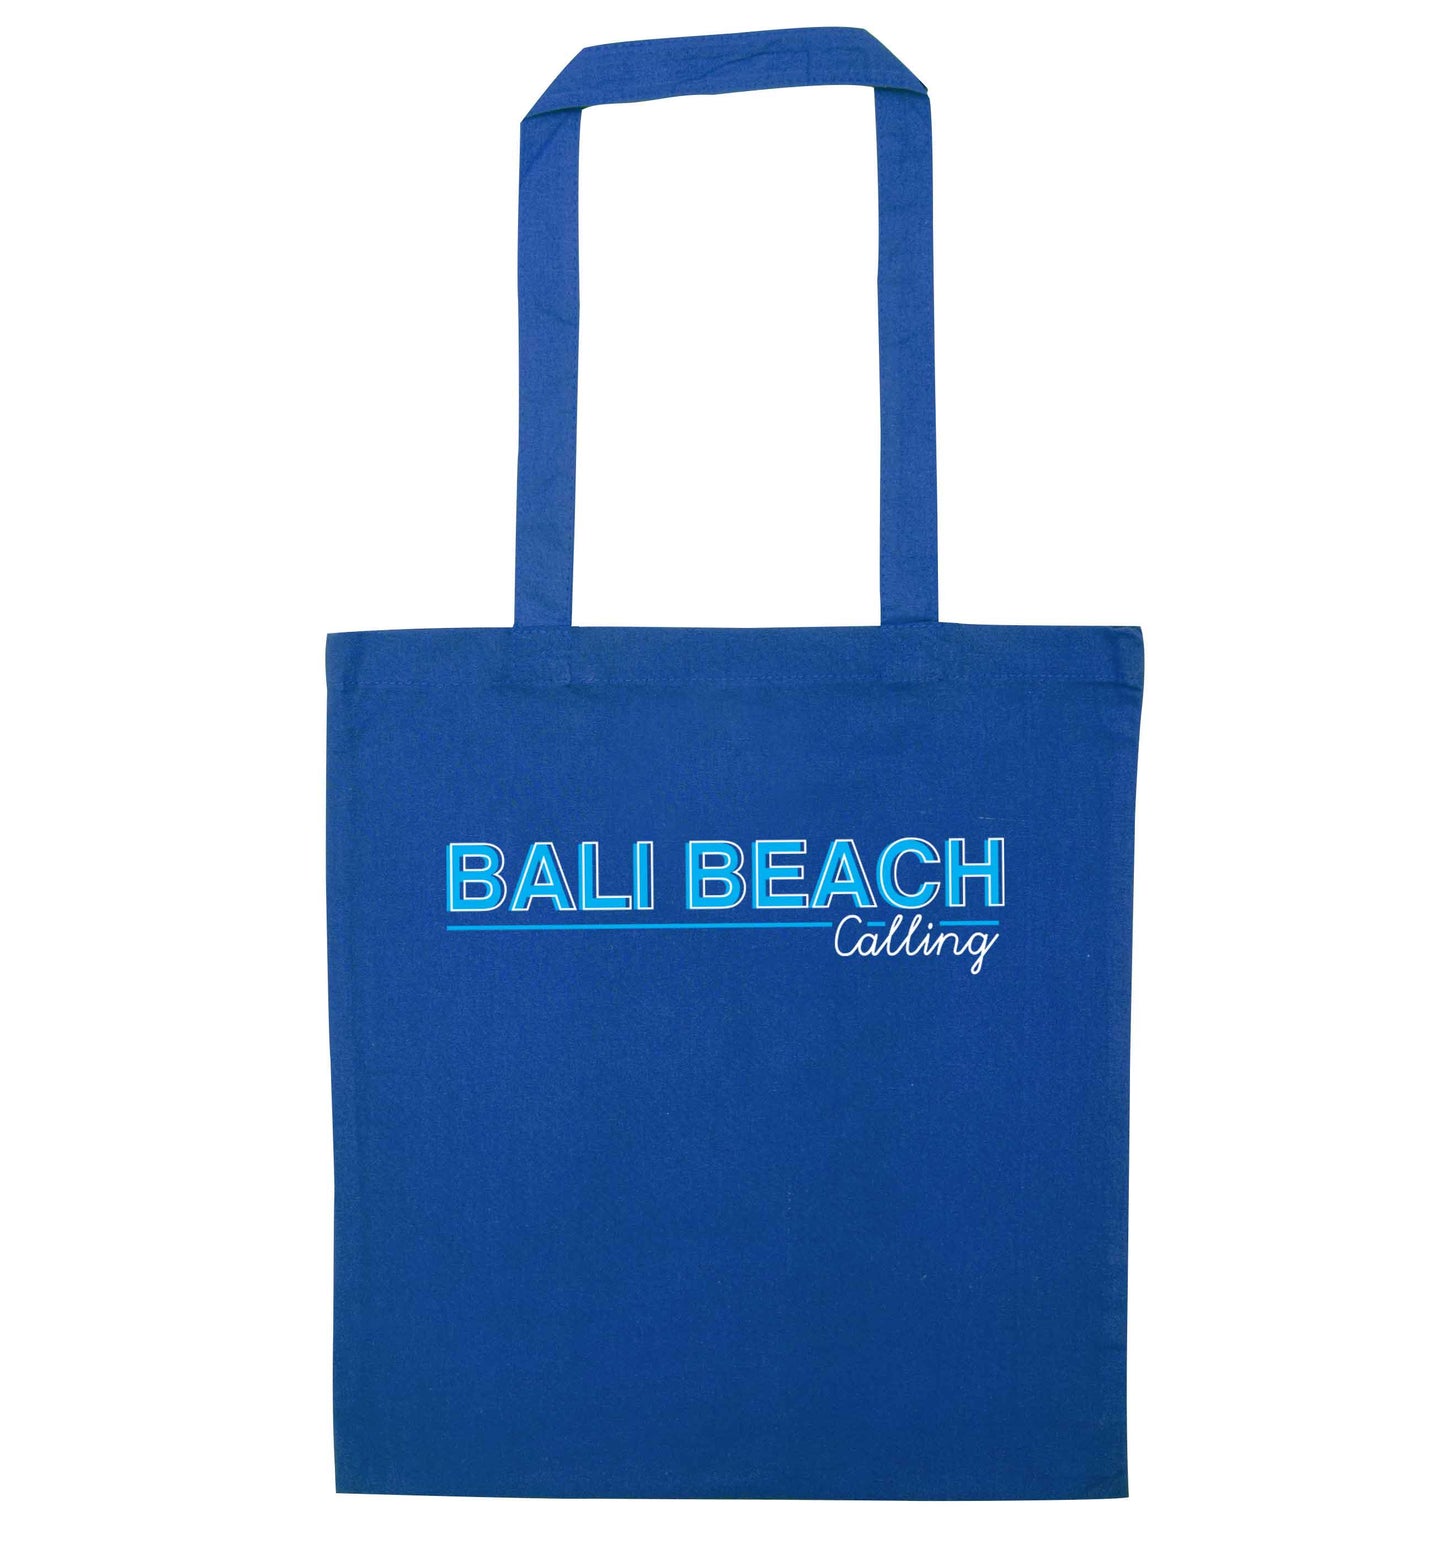 Bali beach calling blue tote bag